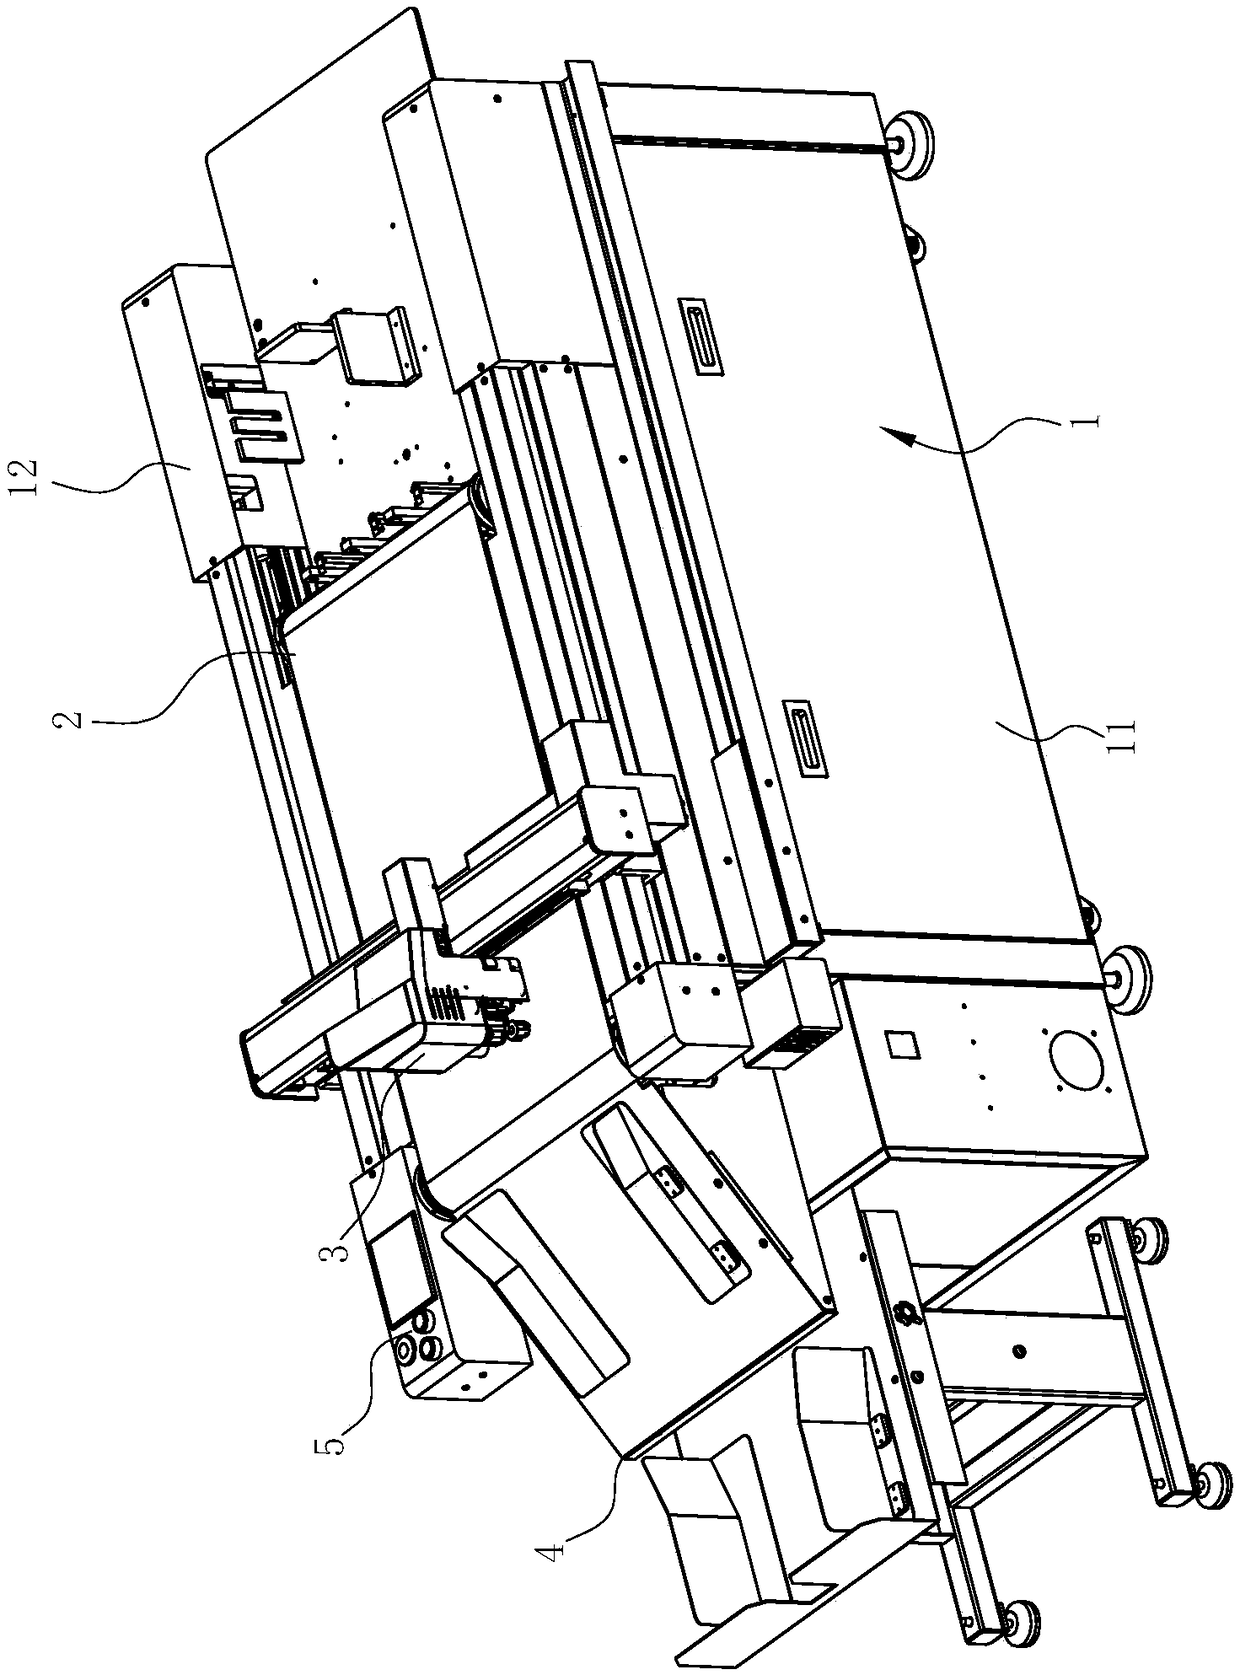 Machine head of graphic paper feeding and cutting machine